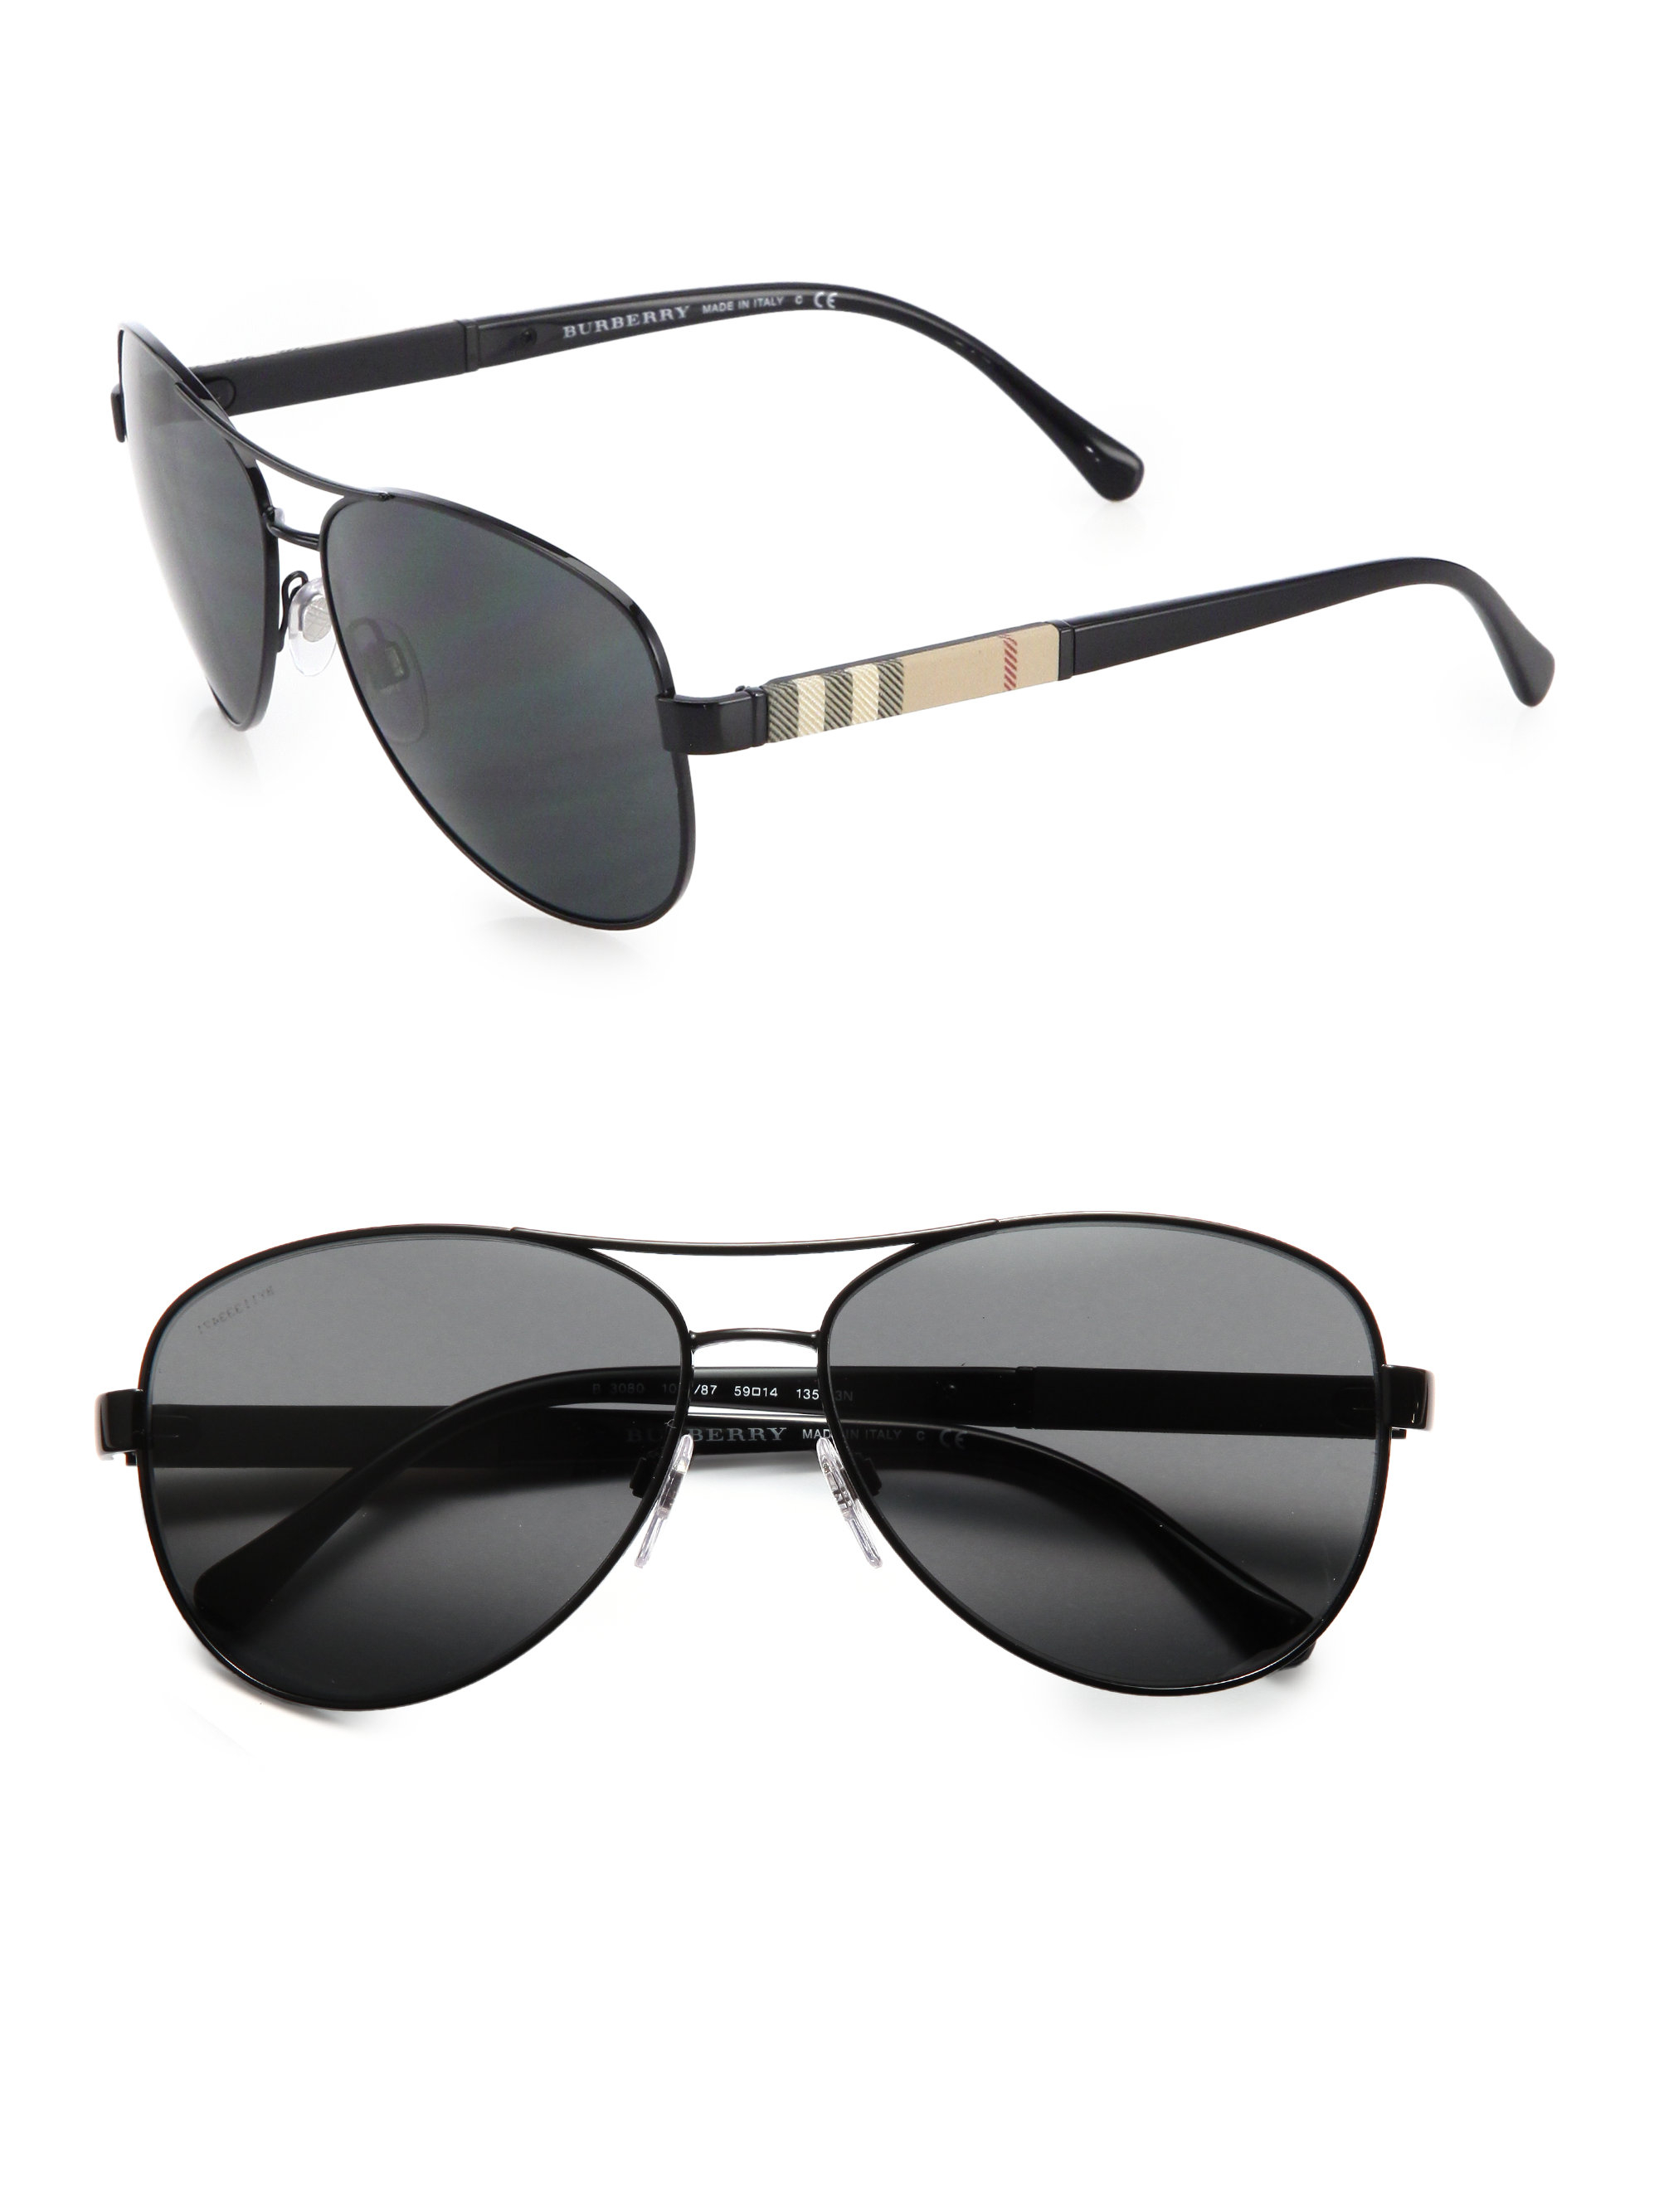 Burberry 59mm Check-print Aviator Sunglasses in Black for Men - Lyst